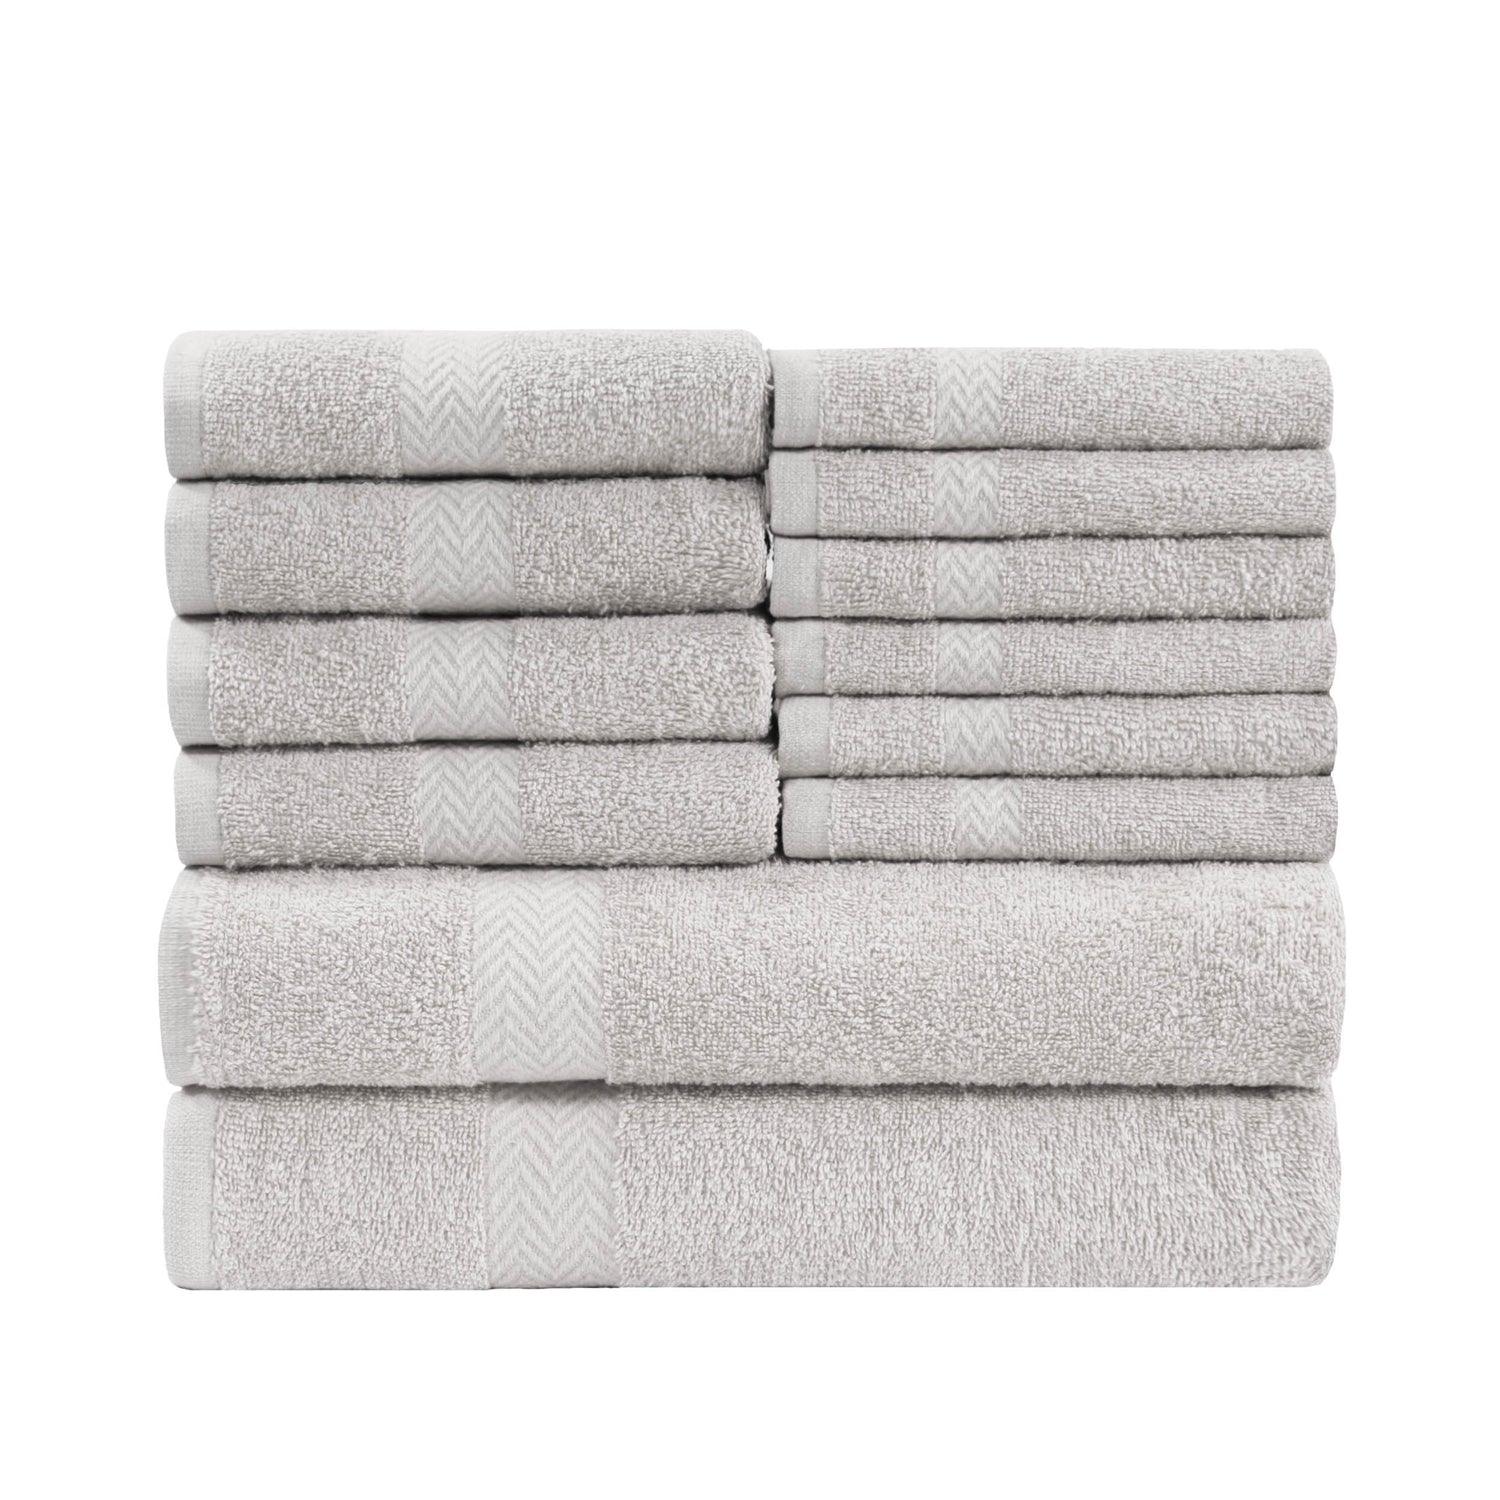 Premium Cotton Assorted Eco-Friendly Towel Set - Sliver